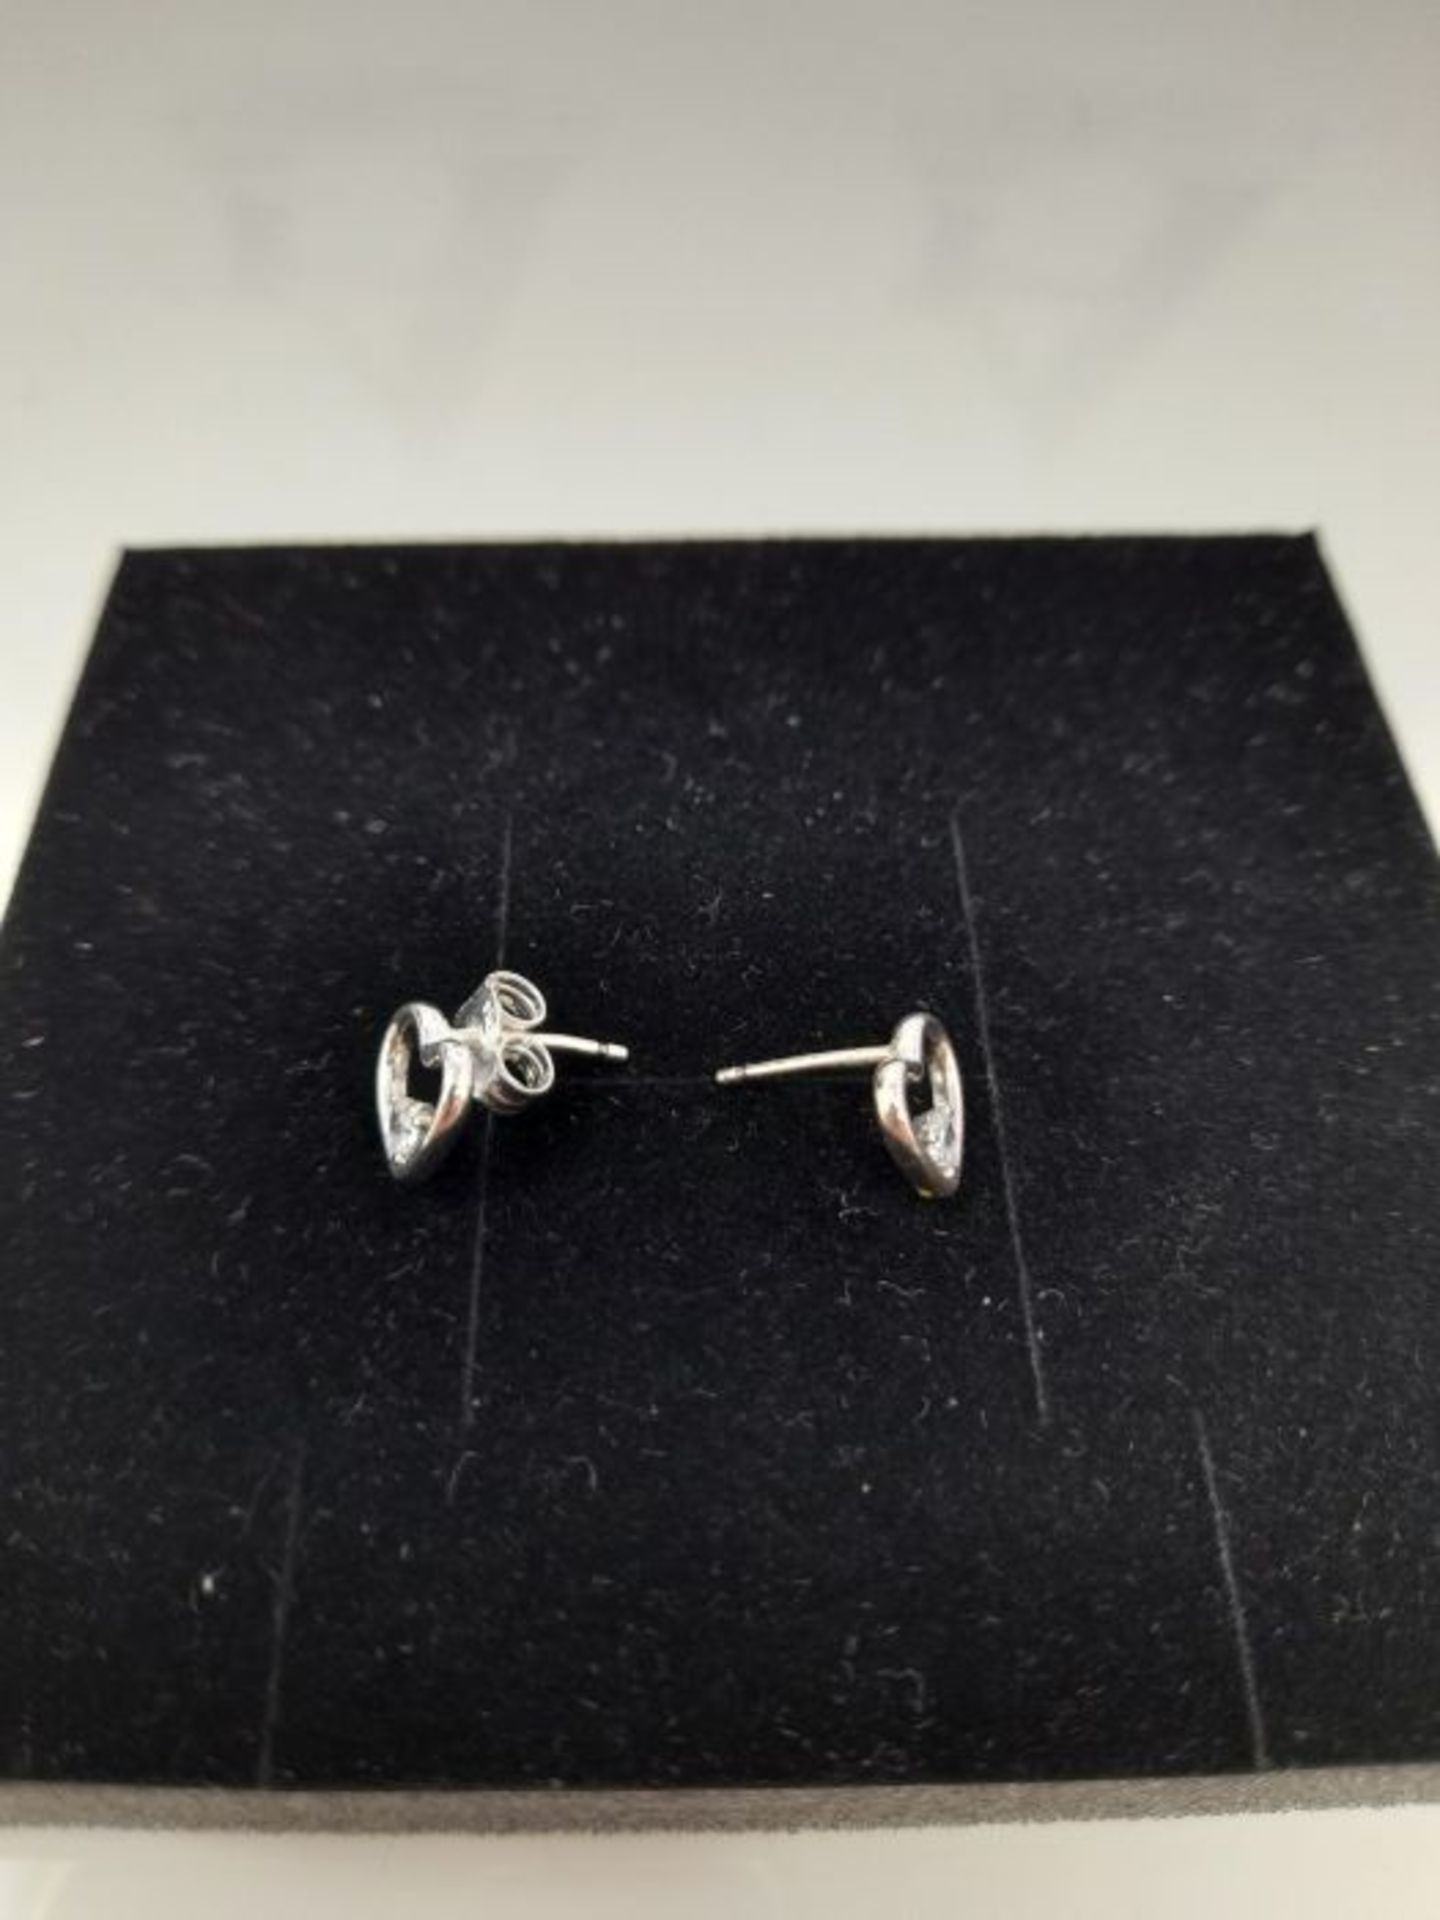 [INCOMPLETE] Pandora Moments Women's Sterling Silver Asymmetrical Heart Stud Earrings - Image 3 of 3